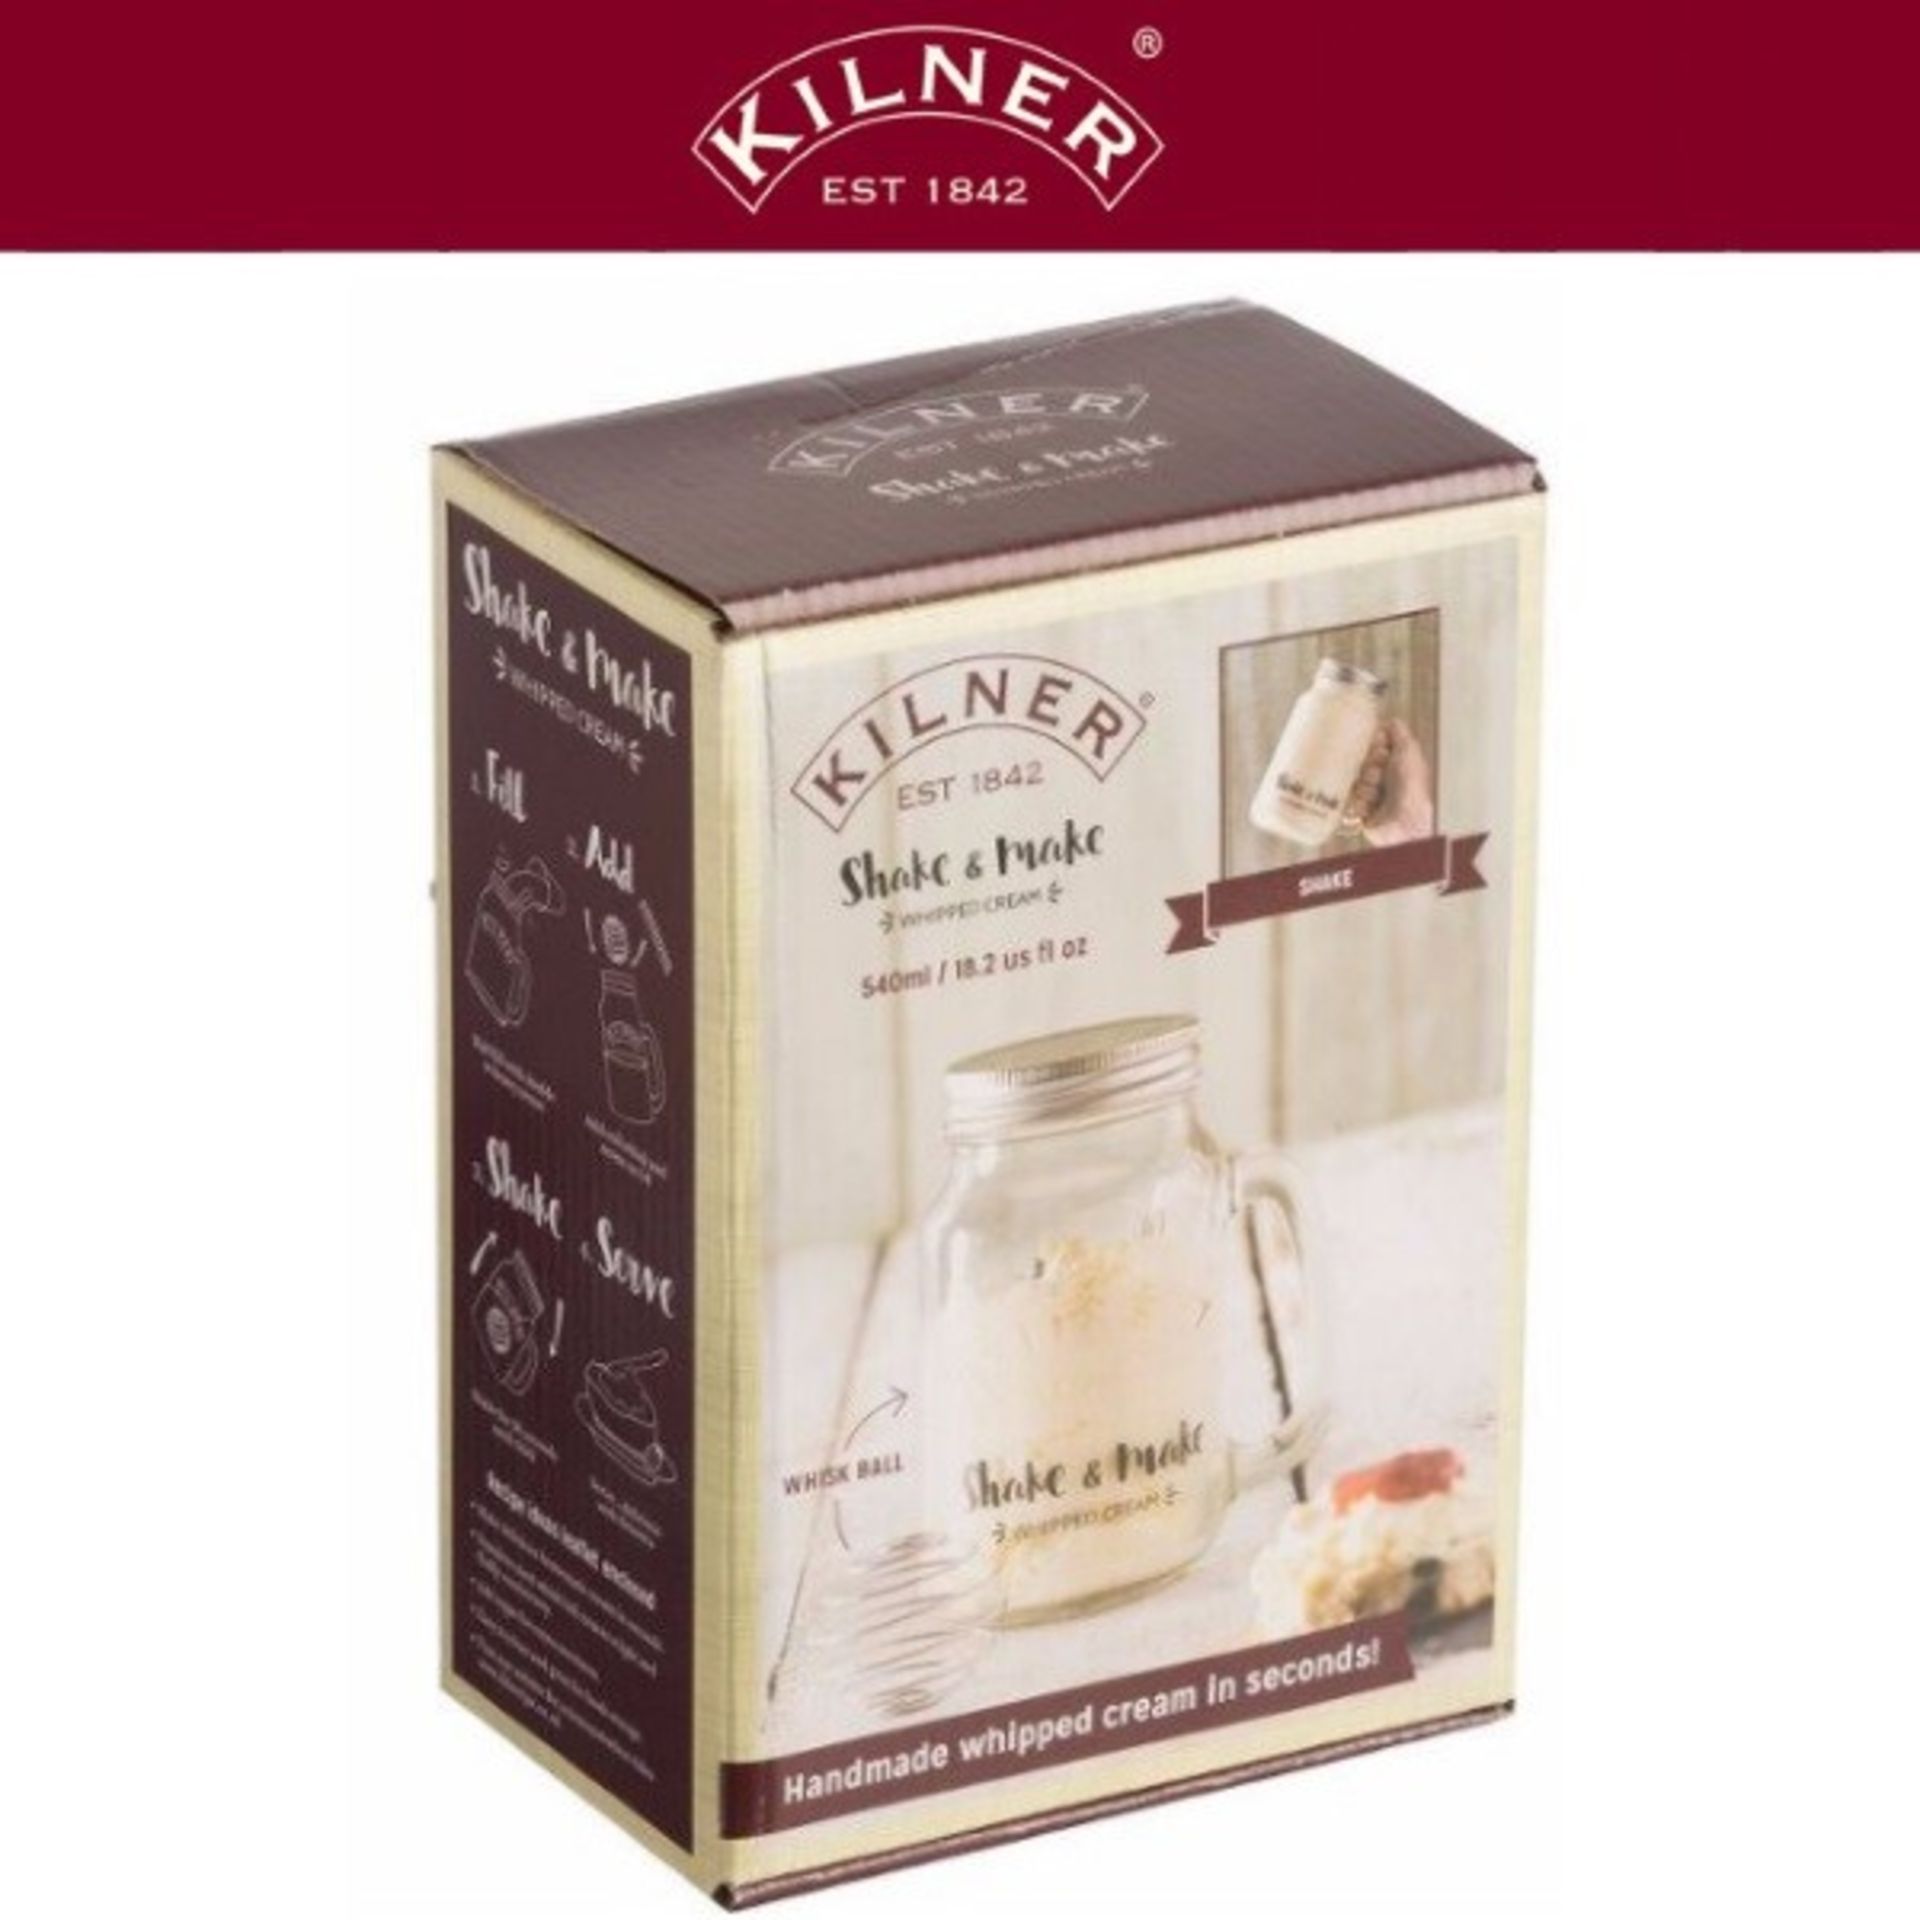 + VAT Brand New Kilner Shake & Make For Hand Made Whipped Cream In Seconds Includes Kilner Handled - Image 2 of 2